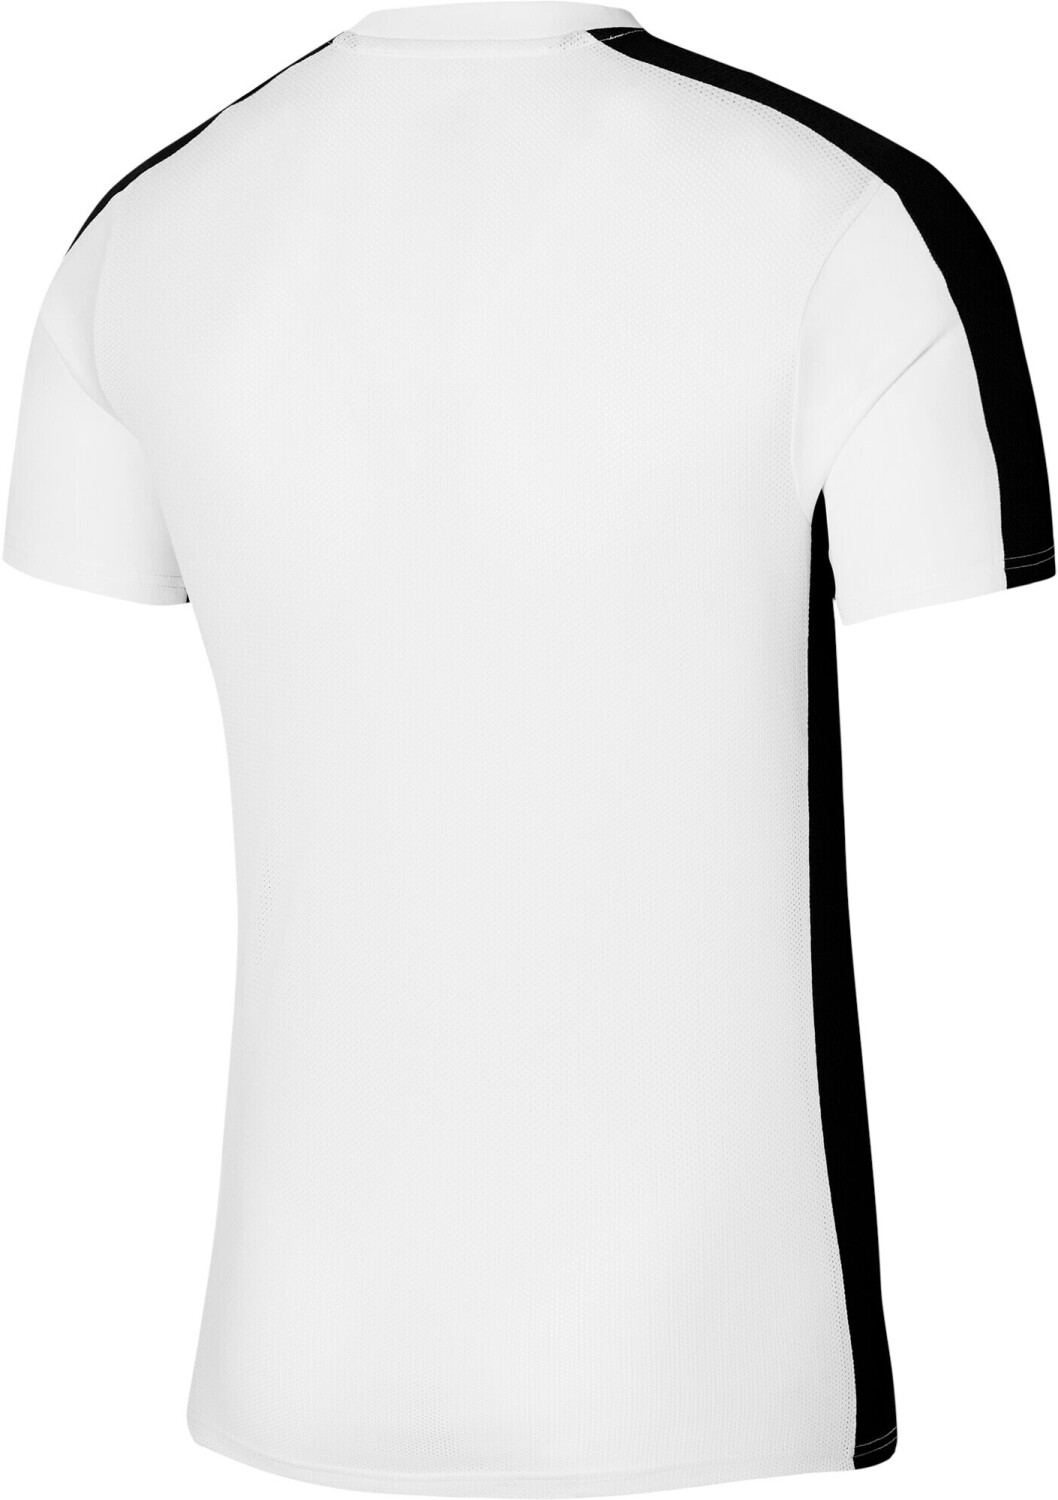 € | Academy white/black/black Nike Dri-FIT Trainingsshirt Kinder 8,64 23 Preisvergleich bei ab Top